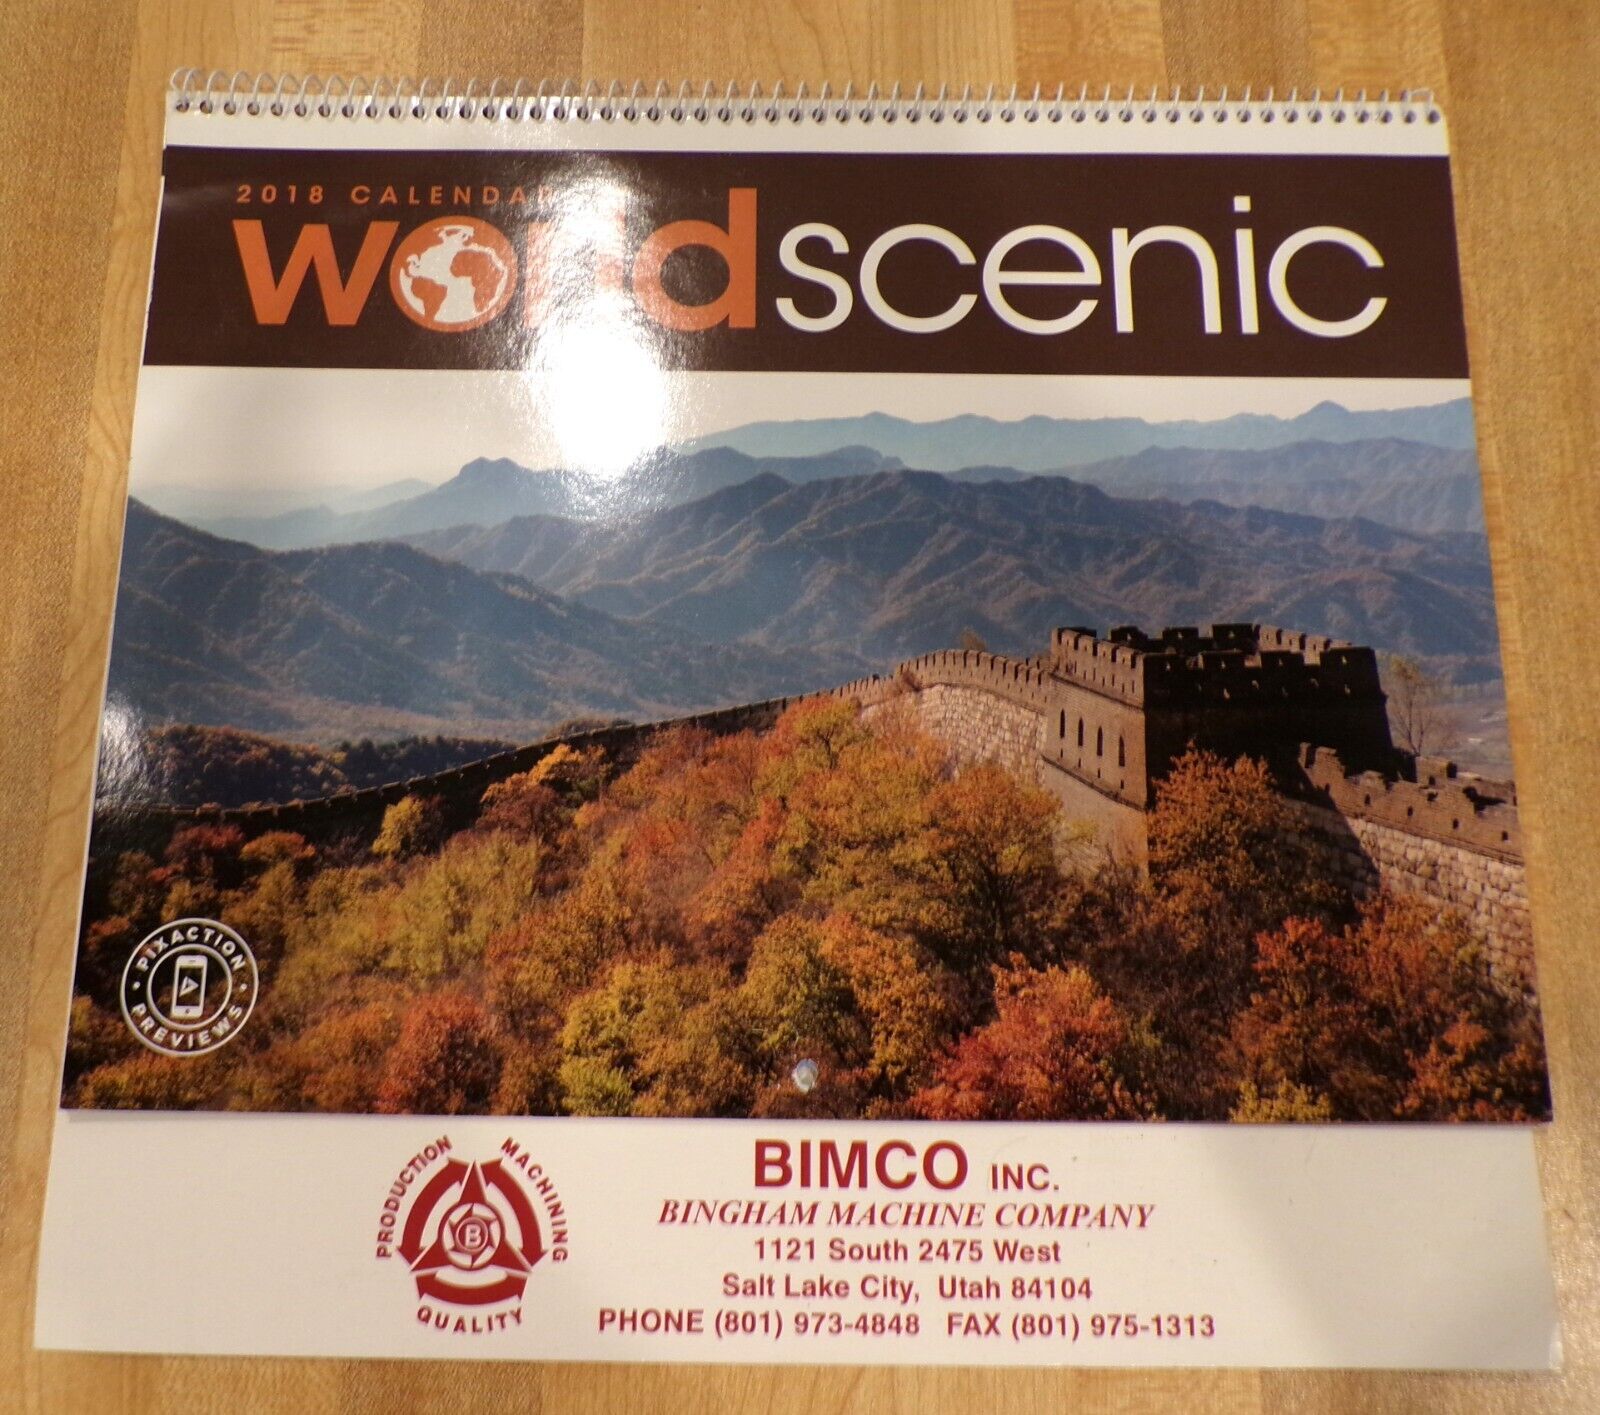 Calendar - 2018 World Scenic, BIMCO, Inc. (Bingham Machine Co.)